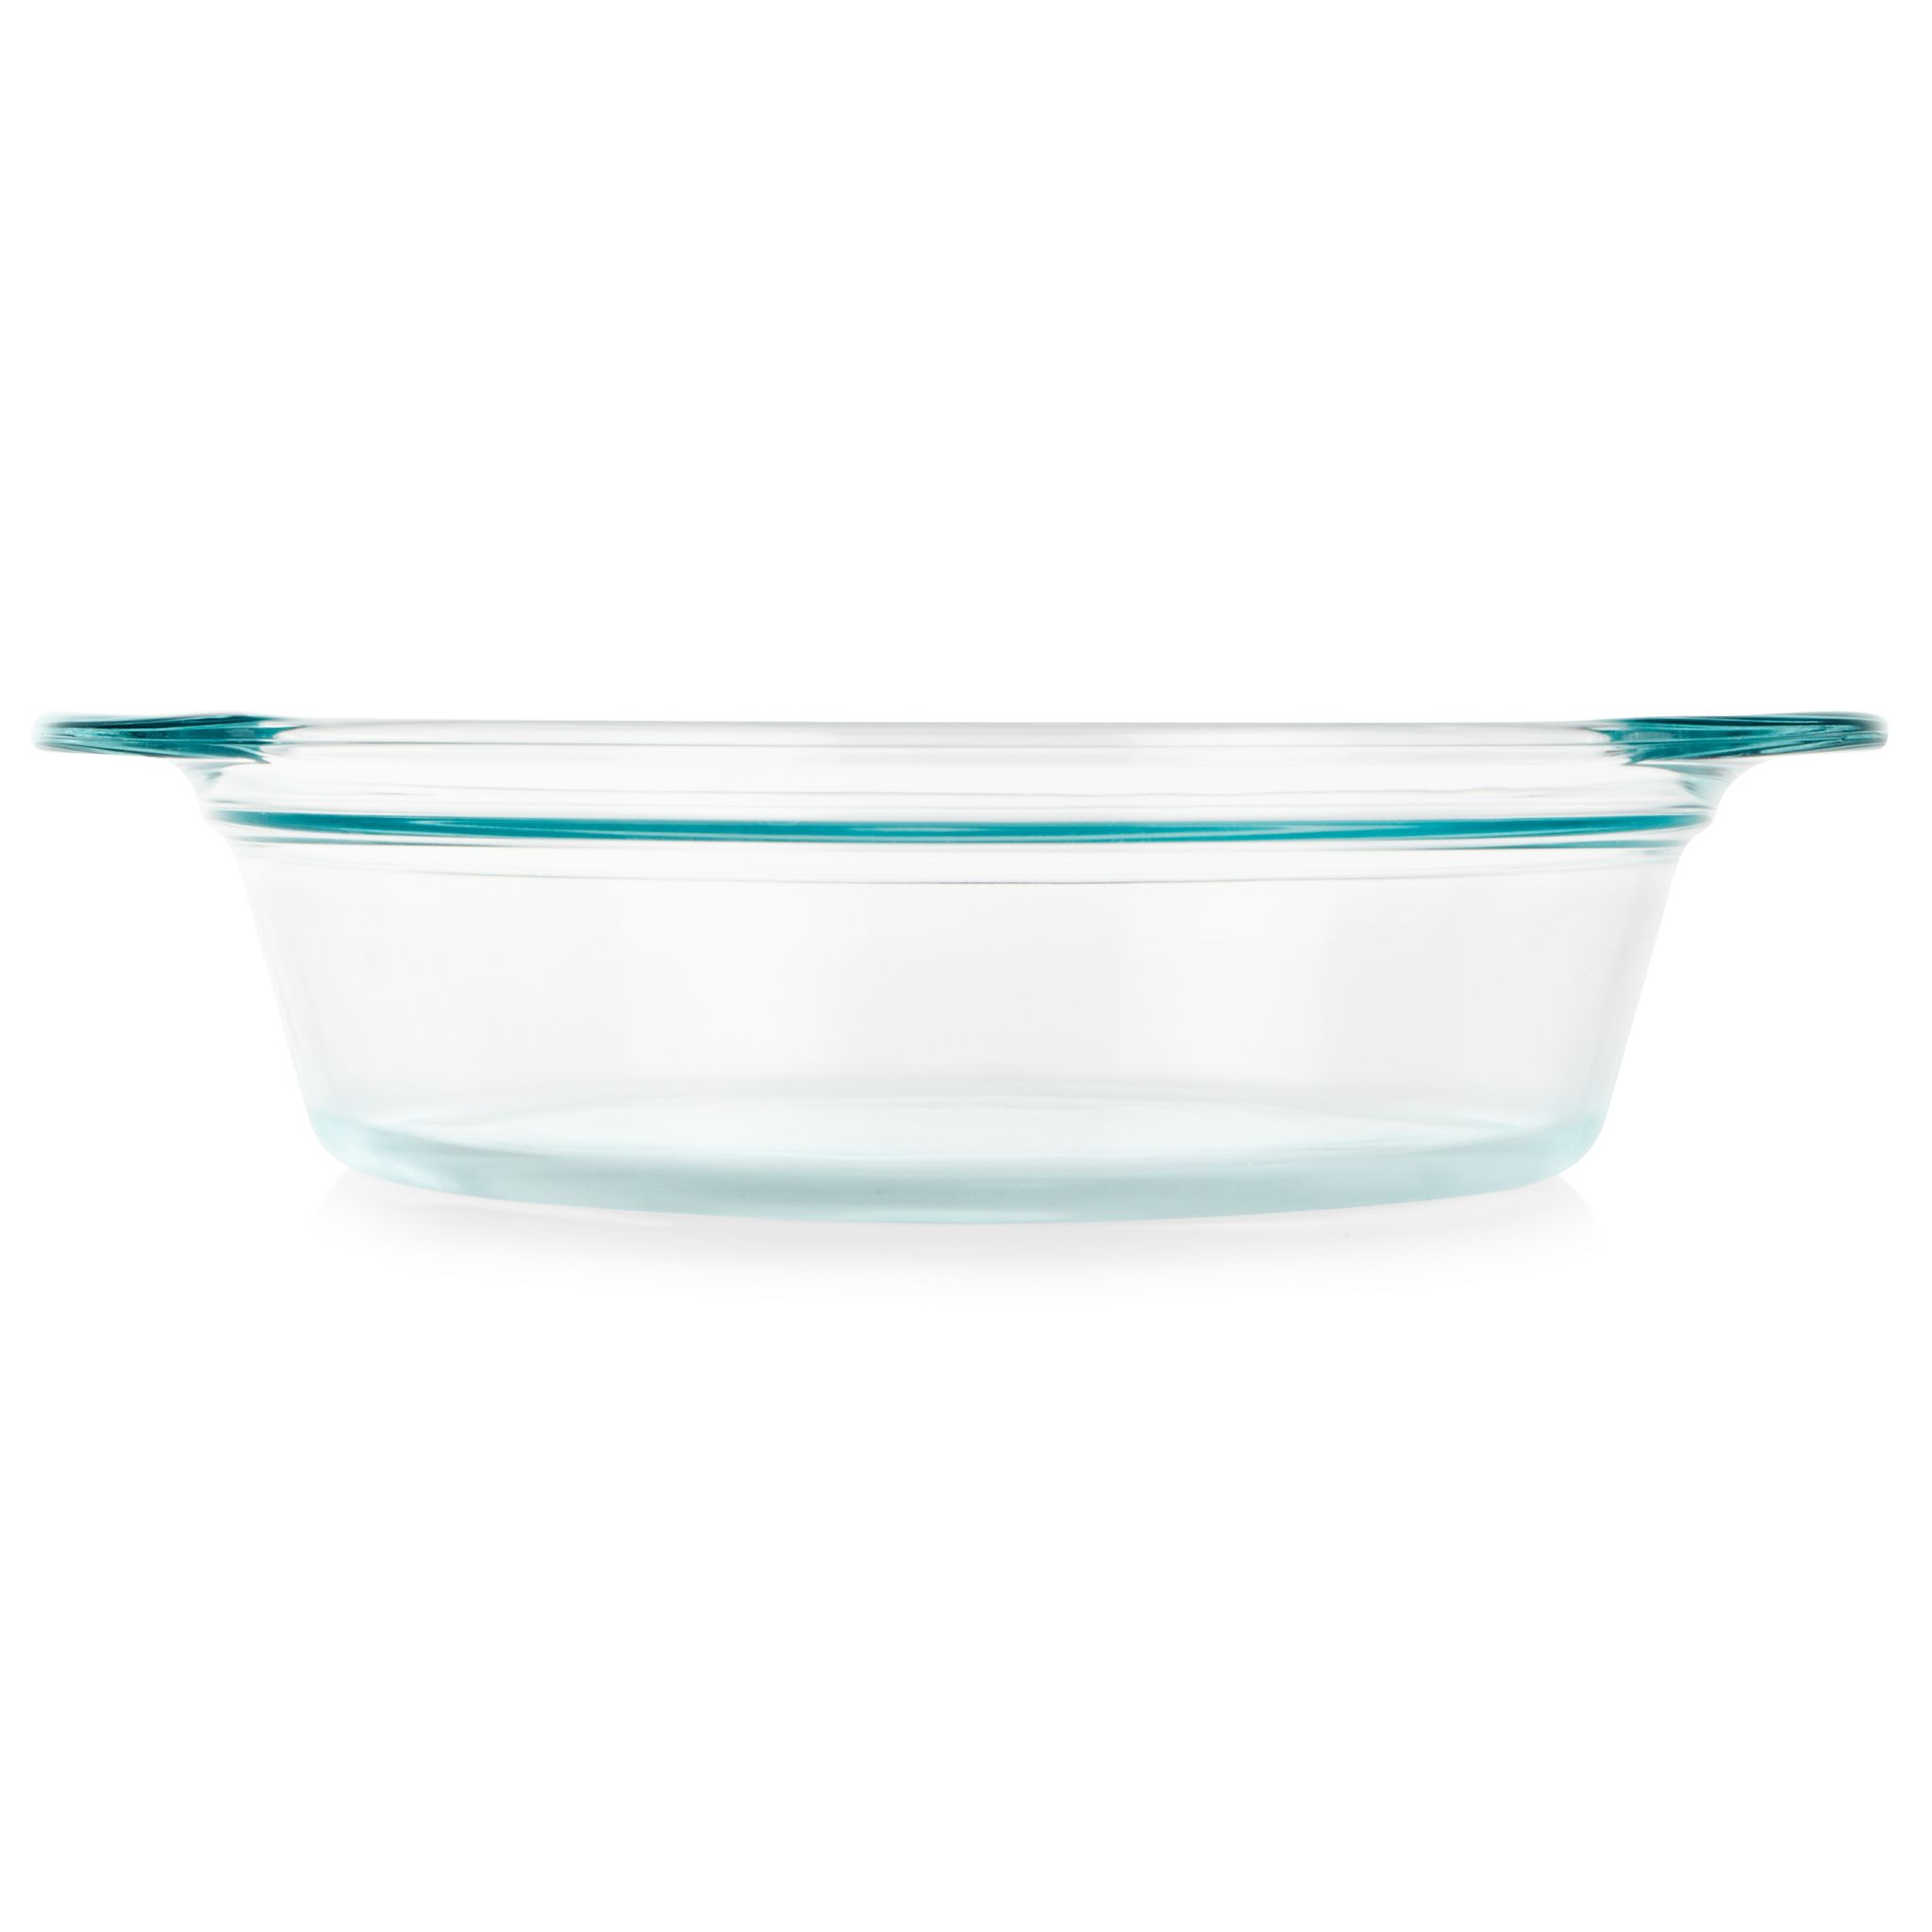 Pyrex Deep Glass Baking Dish 1134581 - 3L